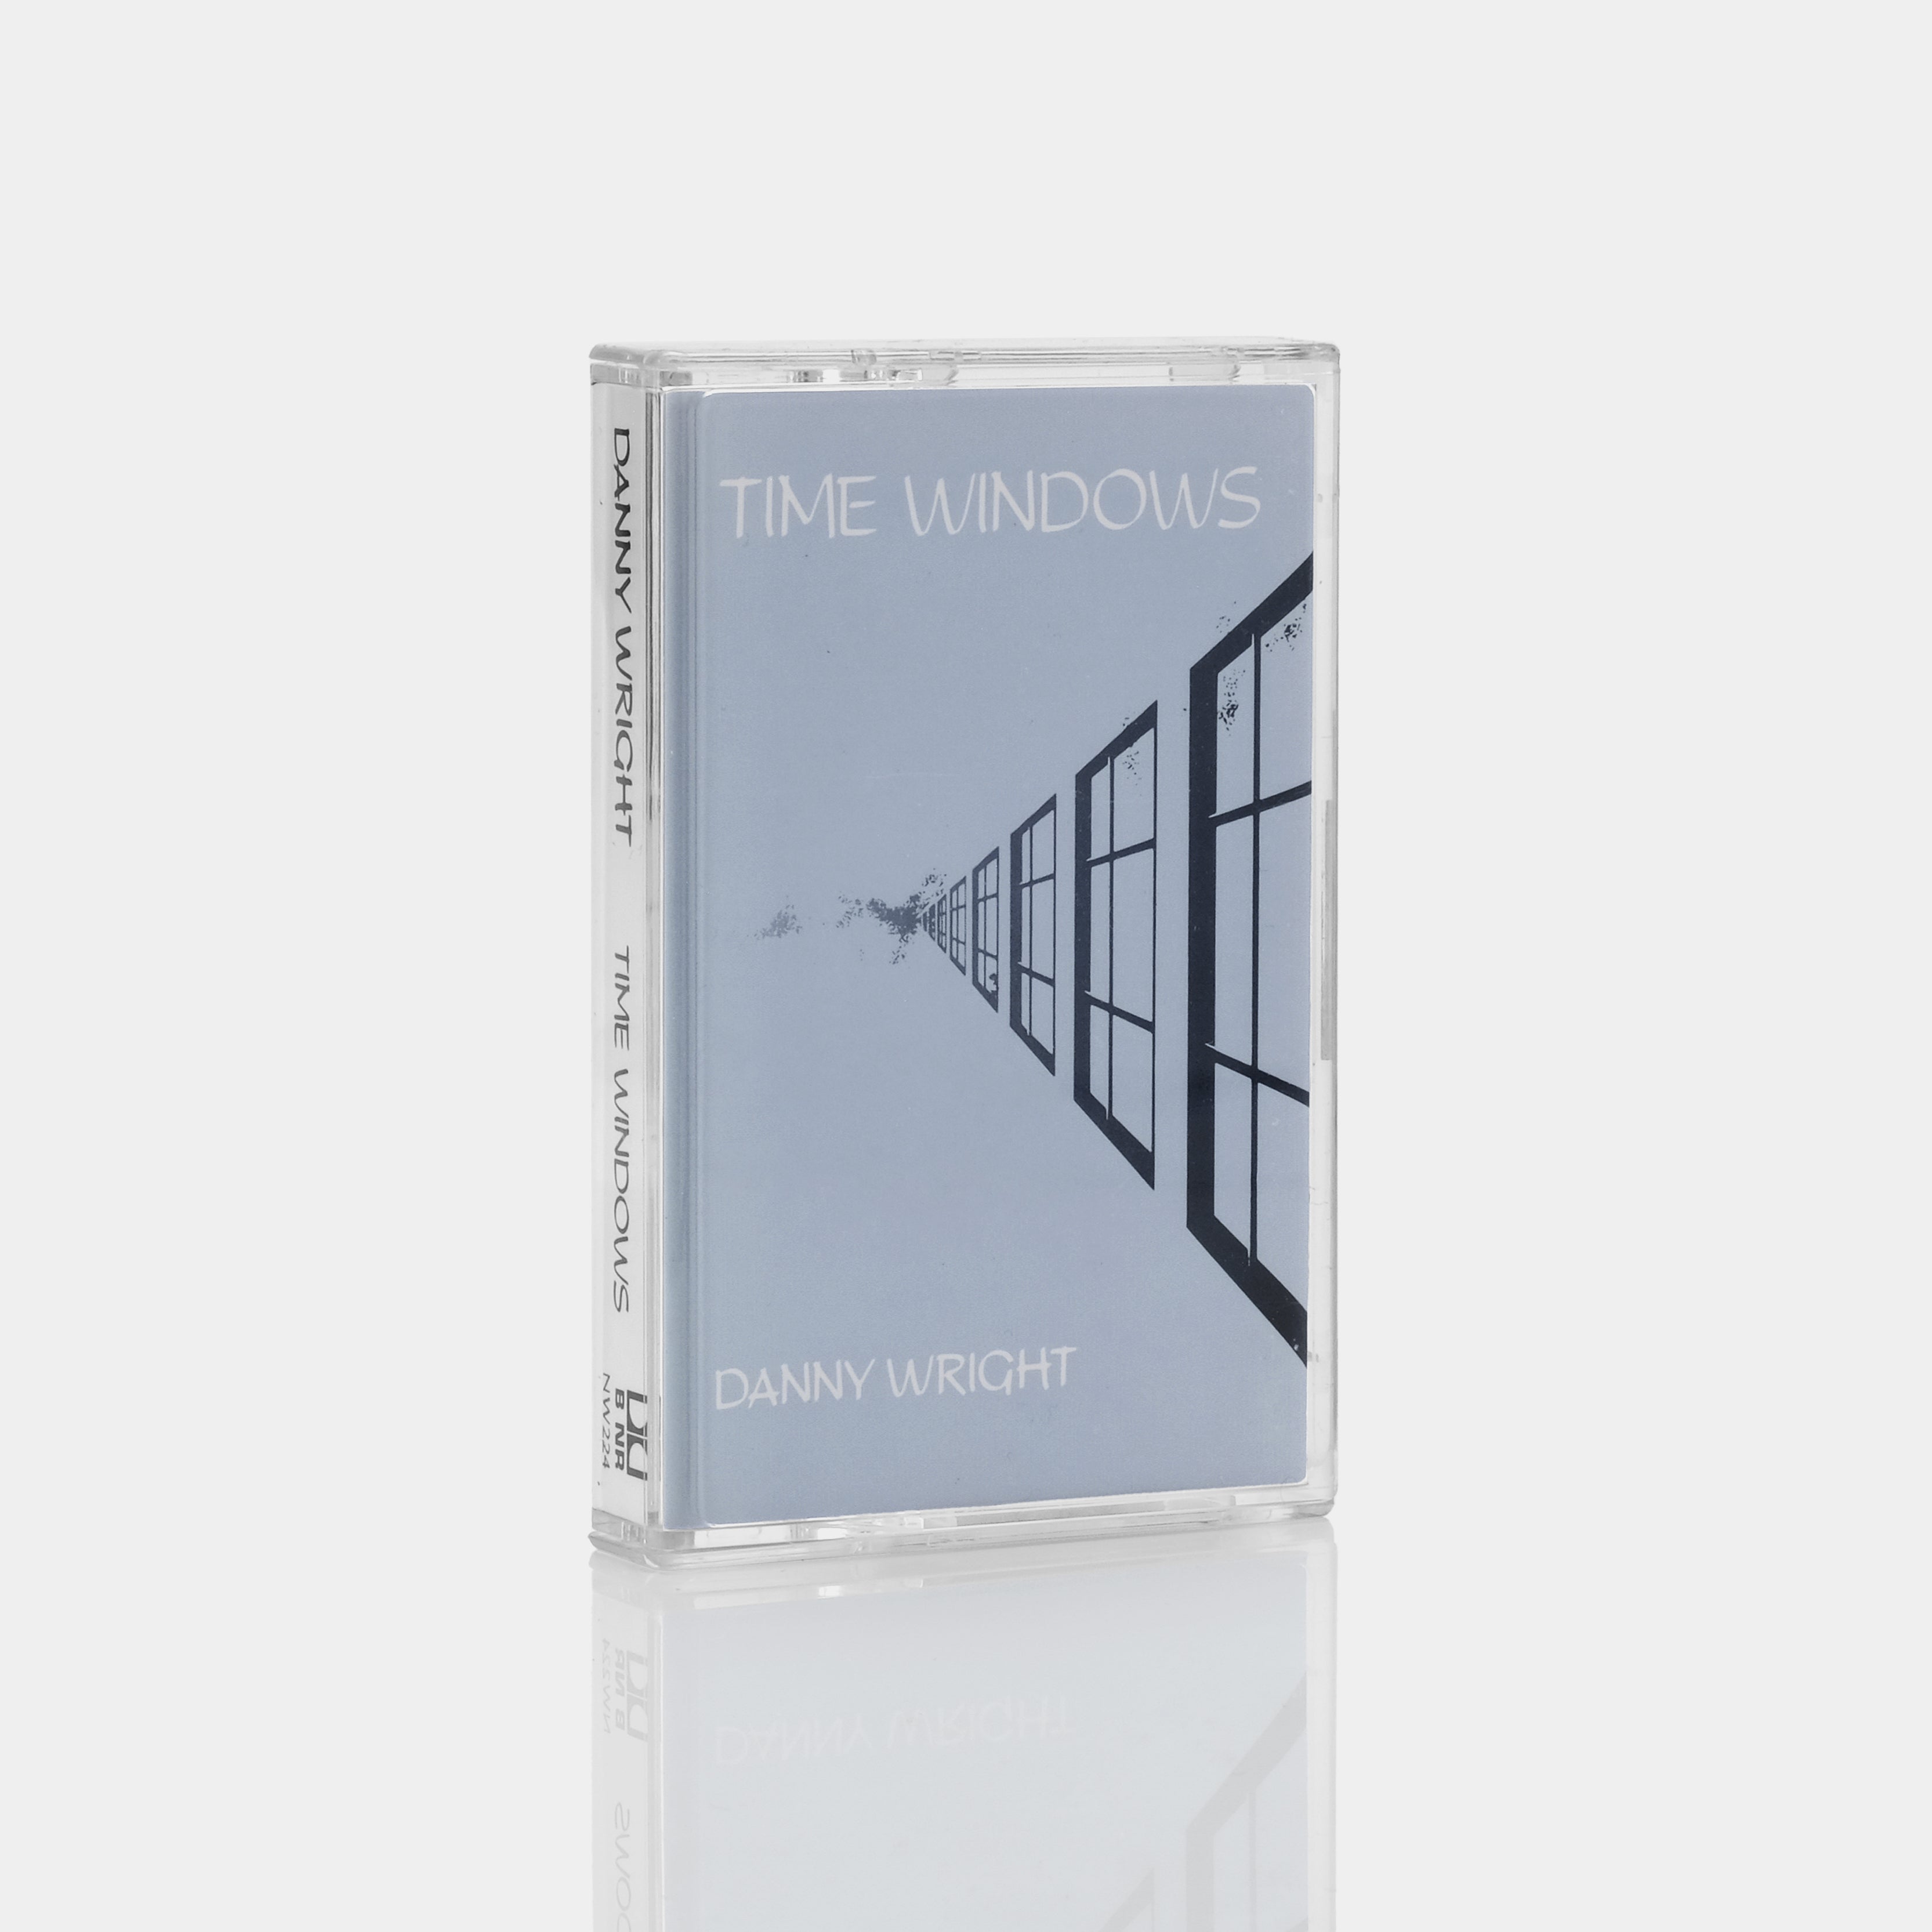 Danny Wright - Time Windows Cassette Tape